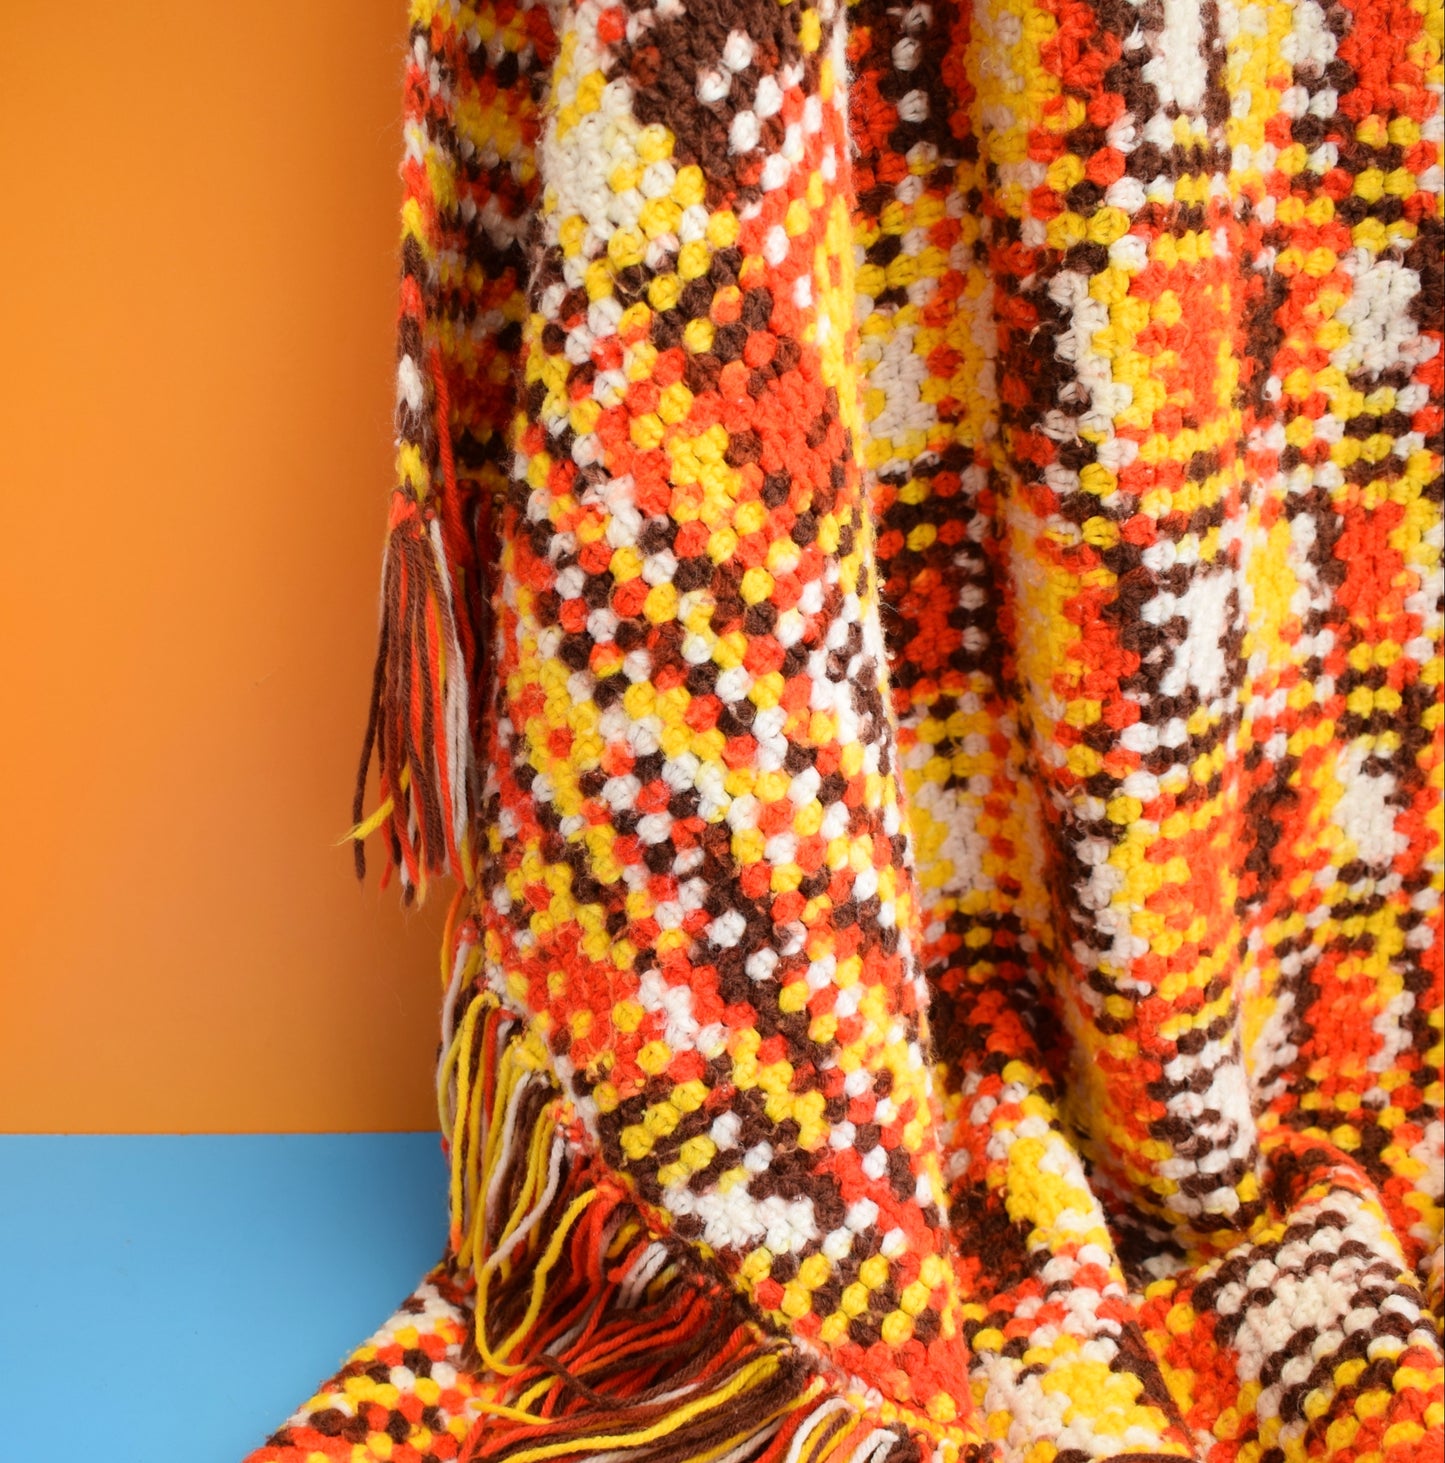 Vintage 1970s Knitted Blanket / Throw - Orange